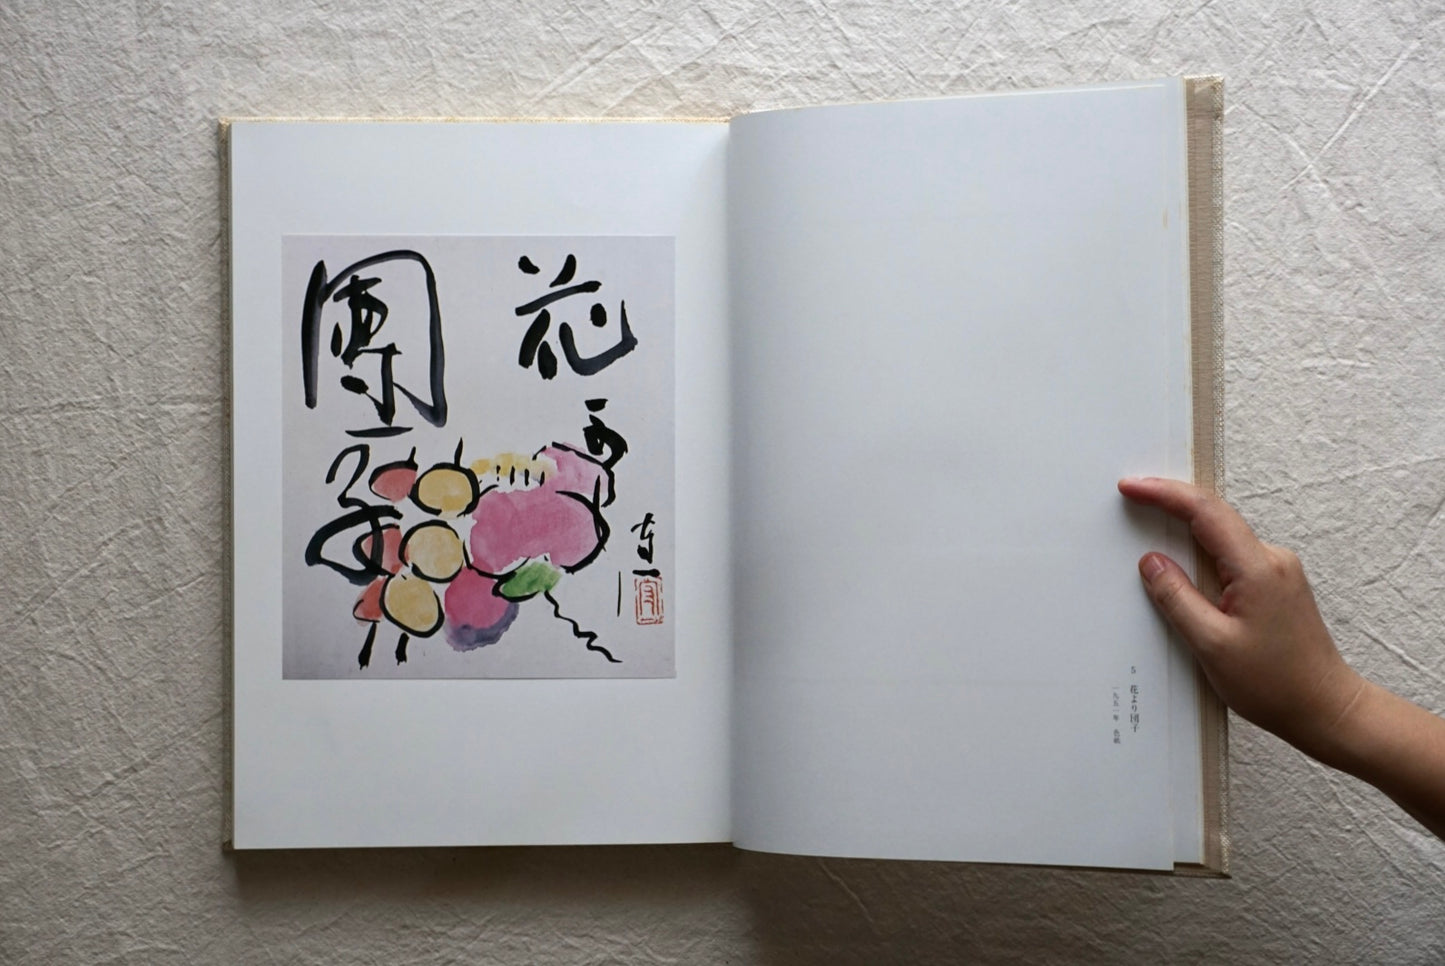 Calligrapher: Morikazu Kumagai